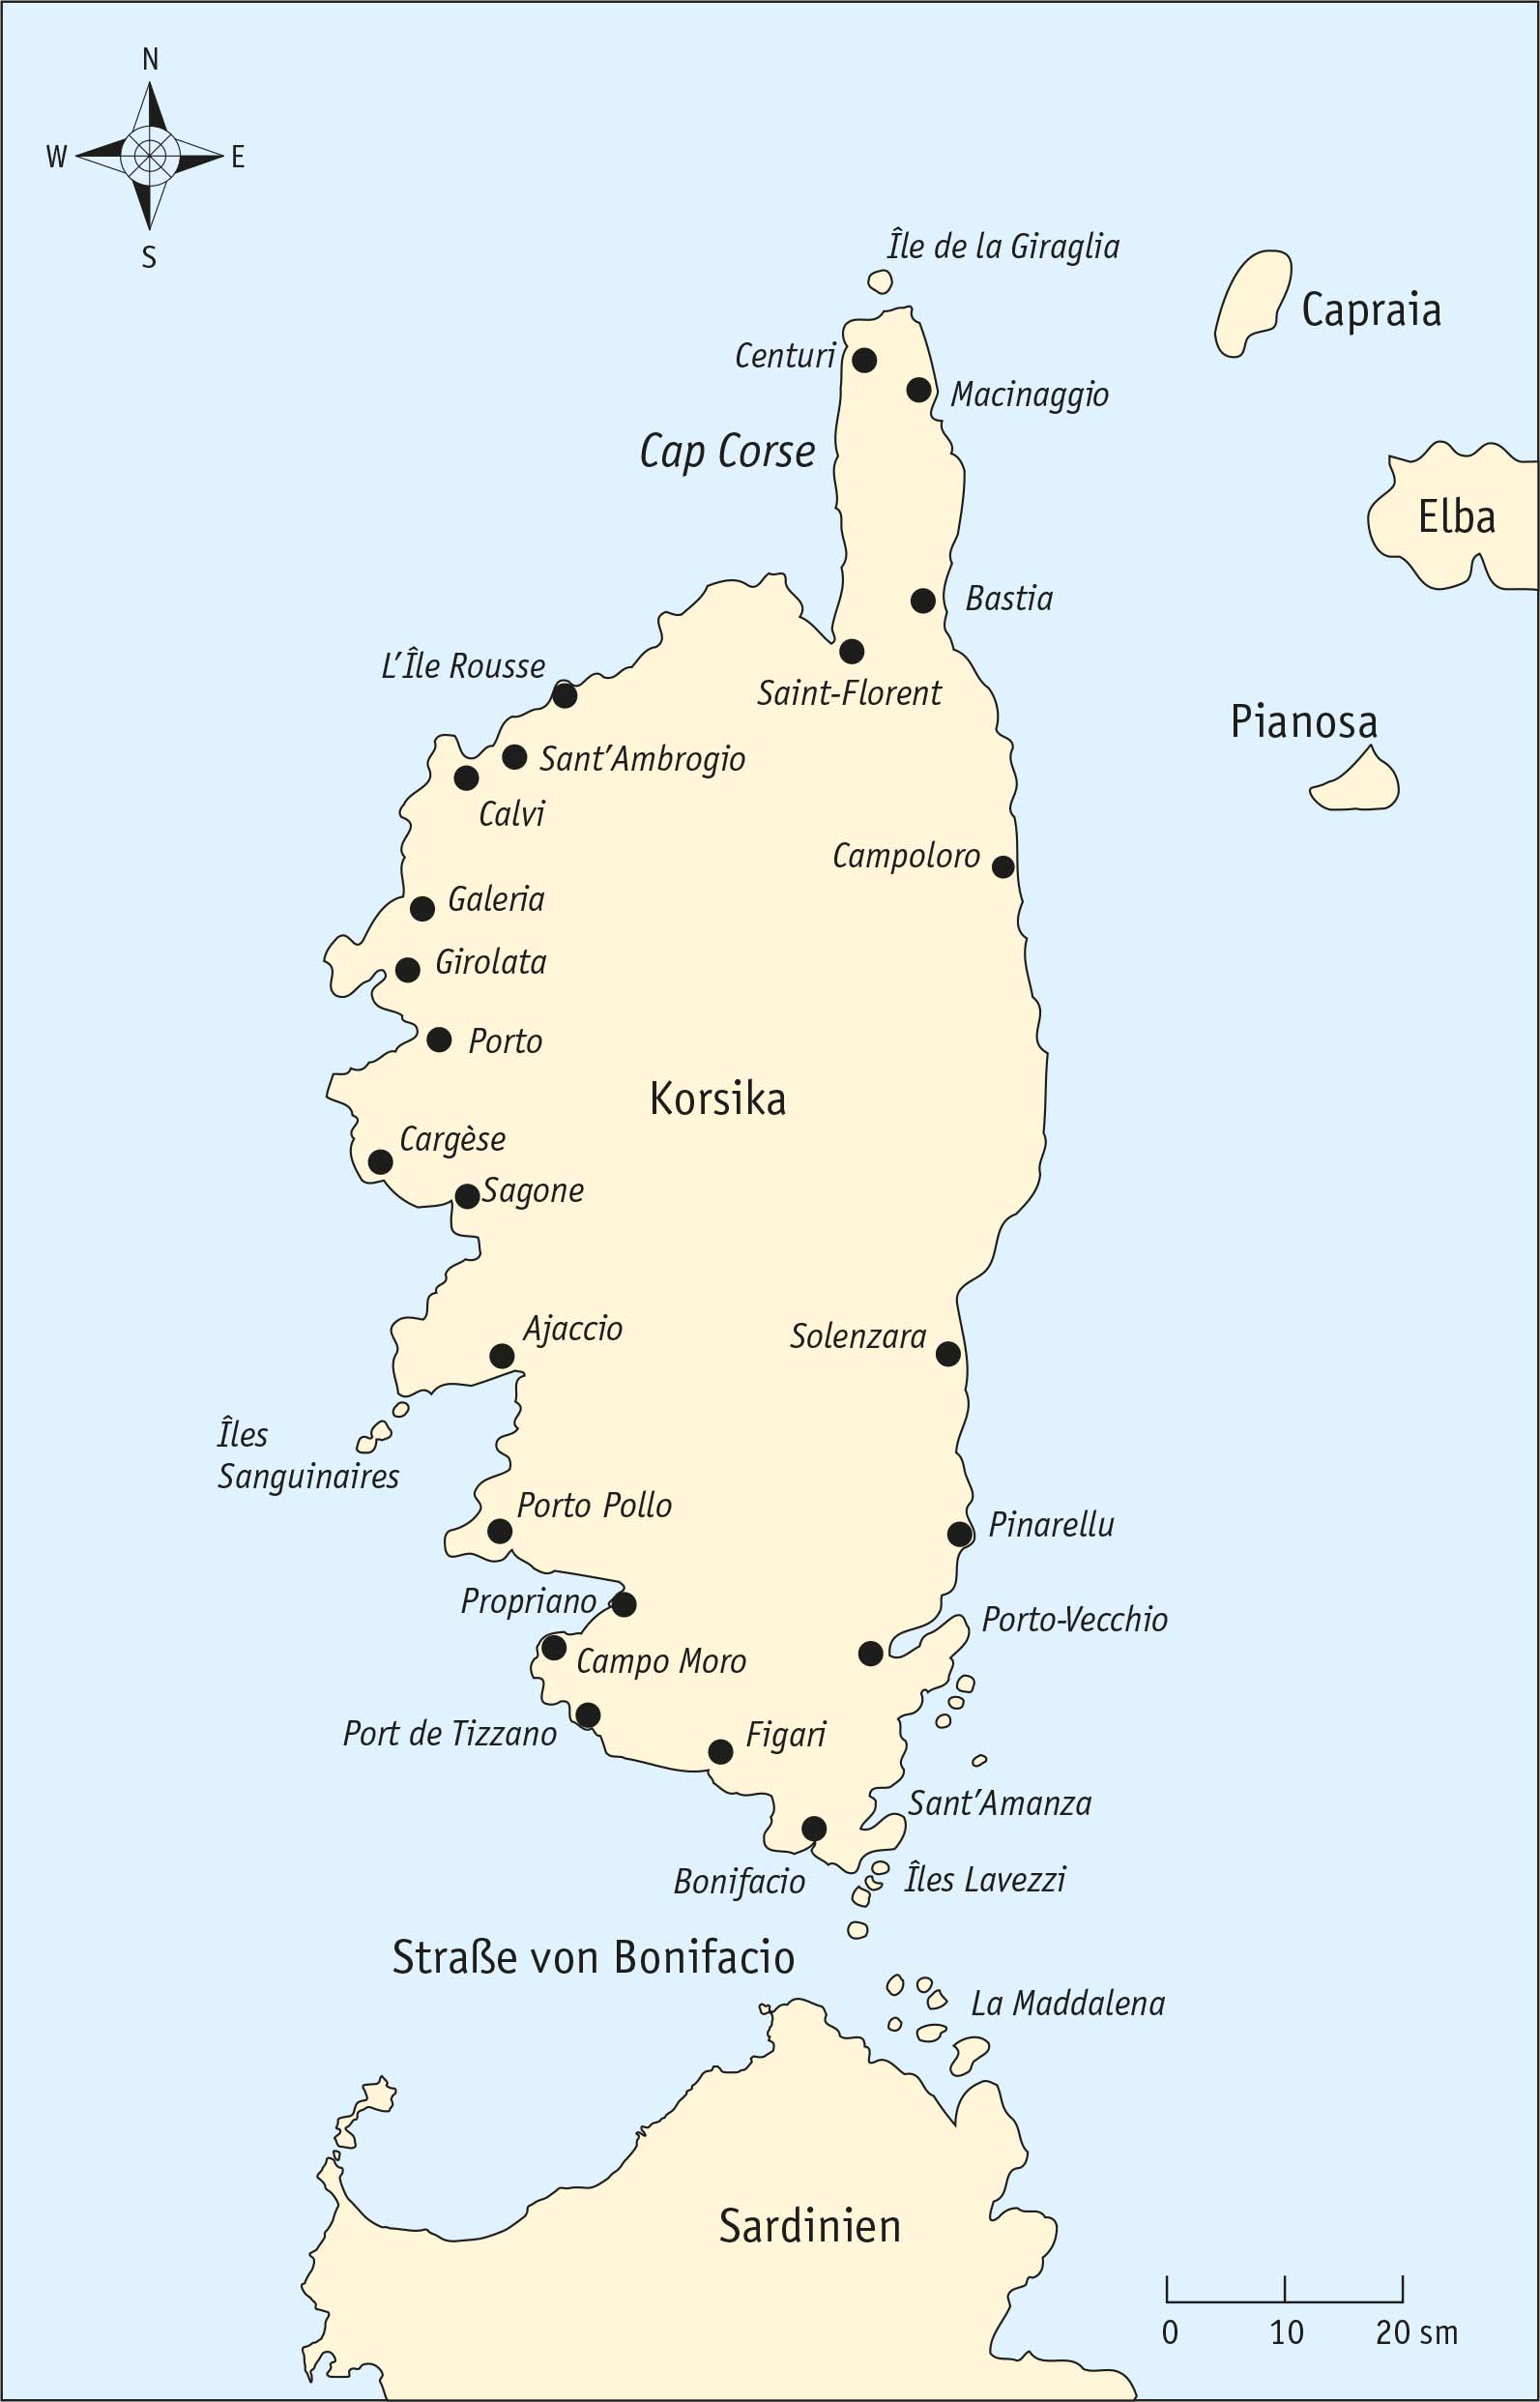 Korsika, Sardinien und Elba